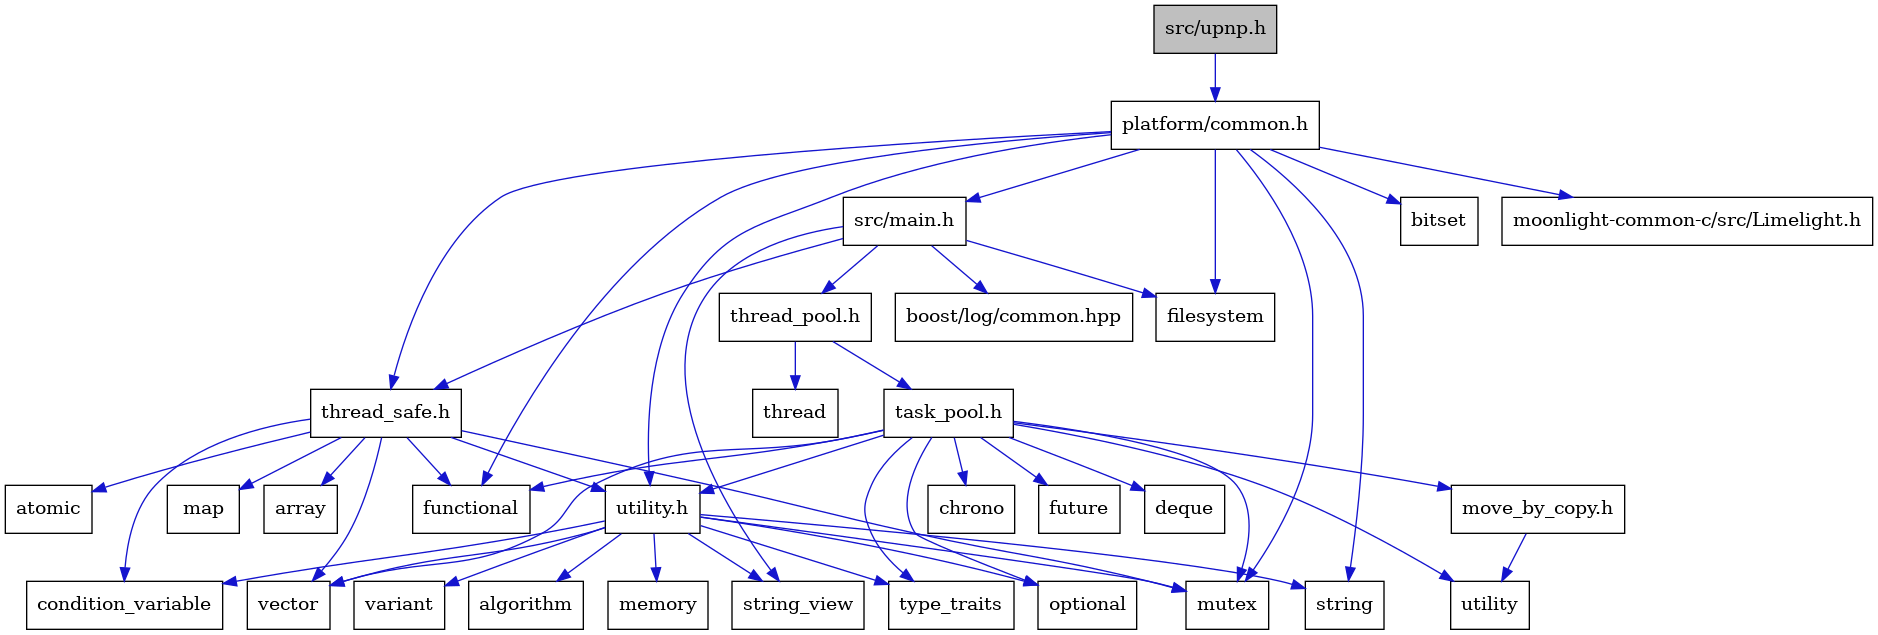 digraph {
    graph [bgcolor="#00000000"]
    node [shape=rectangle style=filled fillcolor="#FFFFFF" font=Helvetica padding=2]
    edge [color="#1414CE"]
    "27" [label="thread_safe.h" tooltip="thread_safe.h"]
    "29" [label="atomic" tooltip="atomic"]
    "5" [label="functional" tooltip="functional"]
    "2" [label="platform/common.h" tooltip="platform/common.h"]
    "4" [label="filesystem" tooltip="filesystem"]
    "21" [label="utility.h" tooltip="utility.h"]
    "25" [label="variant" tooltip="variant"]
    "7" [label="string" tooltip="string"]
    "12" [label="task_pool.h" tooltip="task_pool.h"]
    "30" [label="map" tooltip="map"]
    "23" [label="condition_variable" tooltip="condition_variable"]
    "9" [label="string_view" tooltip="string_view"]
    "3" [label="bitset" tooltip="bitset"]
    "15" [label="future" tooltip="future"]
    "16" [label="optional" tooltip="optional"]
    "19" [label="vector" tooltip="vector"]
    "18" [label="utility" tooltip="utility"]
    "28" [label="array" tooltip="array"]
    "14" [label="deque" tooltip="deque"]
    "6" [label="mutex" tooltip="mutex"]
    "13" [label="chrono" tooltip="chrono"]
    "8" [label="src/main.h" tooltip="src/main.h"]
    "26" [label="thread" tooltip="thread"]
    "1" [label="src/upnp.h" tooltip="src/upnp.h" fillcolor="#BFBFBF"]
    "17" [label="type_traits" tooltip="type_traits"]
    "31" [label="moonlight-common-c/src/Limelight.h" tooltip="moonlight-common-c/src/Limelight.h"]
    "20" [label="move_by_copy.h" tooltip="move_by_copy.h"]
    "11" [label="thread_pool.h" tooltip="thread_pool.h"]
    "10" [label="boost/log/common.hpp" tooltip="boost/log/common.hpp"]
    "22" [label="algorithm" tooltip="algorithm"]
    "24" [label="memory" tooltip="memory"]
    "27" -> "28" [dir=forward tooltip="include"]
    "27" -> "29" [dir=forward tooltip="include"]
    "27" -> "23" [dir=forward tooltip="include"]
    "27" -> "5" [dir=forward tooltip="include"]
    "27" -> "30" [dir=forward tooltip="include"]
    "27" -> "6" [dir=forward tooltip="include"]
    "27" -> "19" [dir=forward tooltip="include"]
    "27" -> "21" [dir=forward tooltip="include"]
    "2" -> "3" [dir=forward tooltip="include"]
    "2" -> "4" [dir=forward tooltip="include"]
    "2" -> "5" [dir=forward tooltip="include"]
    "2" -> "6" [dir=forward tooltip="include"]
    "2" -> "7" [dir=forward tooltip="include"]
    "2" -> "8" [dir=forward tooltip="include"]
    "2" -> "27" [dir=forward tooltip="include"]
    "2" -> "21" [dir=forward tooltip="include"]
    "2" -> "31" [dir=forward tooltip="include"]
    "21" -> "22" [dir=forward tooltip="include"]
    "21" -> "23" [dir=forward tooltip="include"]
    "21" -> "24" [dir=forward tooltip="include"]
    "21" -> "6" [dir=forward tooltip="include"]
    "21" -> "16" [dir=forward tooltip="include"]
    "21" -> "7" [dir=forward tooltip="include"]
    "21" -> "9" [dir=forward tooltip="include"]
    "21" -> "17" [dir=forward tooltip="include"]
    "21" -> "25" [dir=forward tooltip="include"]
    "21" -> "19" [dir=forward tooltip="include"]
    "12" -> "13" [dir=forward tooltip="include"]
    "12" -> "14" [dir=forward tooltip="include"]
    "12" -> "5" [dir=forward tooltip="include"]
    "12" -> "15" [dir=forward tooltip="include"]
    "12" -> "6" [dir=forward tooltip="include"]
    "12" -> "16" [dir=forward tooltip="include"]
    "12" -> "17" [dir=forward tooltip="include"]
    "12" -> "18" [dir=forward tooltip="include"]
    "12" -> "19" [dir=forward tooltip="include"]
    "12" -> "20" [dir=forward tooltip="include"]
    "12" -> "21" [dir=forward tooltip="include"]
    "8" -> "4" [dir=forward tooltip="include"]
    "8" -> "9" [dir=forward tooltip="include"]
    "8" -> "10" [dir=forward tooltip="include"]
    "8" -> "11" [dir=forward tooltip="include"]
    "8" -> "27" [dir=forward tooltip="include"]
    "1" -> "2" [dir=forward tooltip="include"]
    "20" -> "18" [dir=forward tooltip="include"]
    "11" -> "12" [dir=forward tooltip="include"]
    "11" -> "26" [dir=forward tooltip="include"]
}